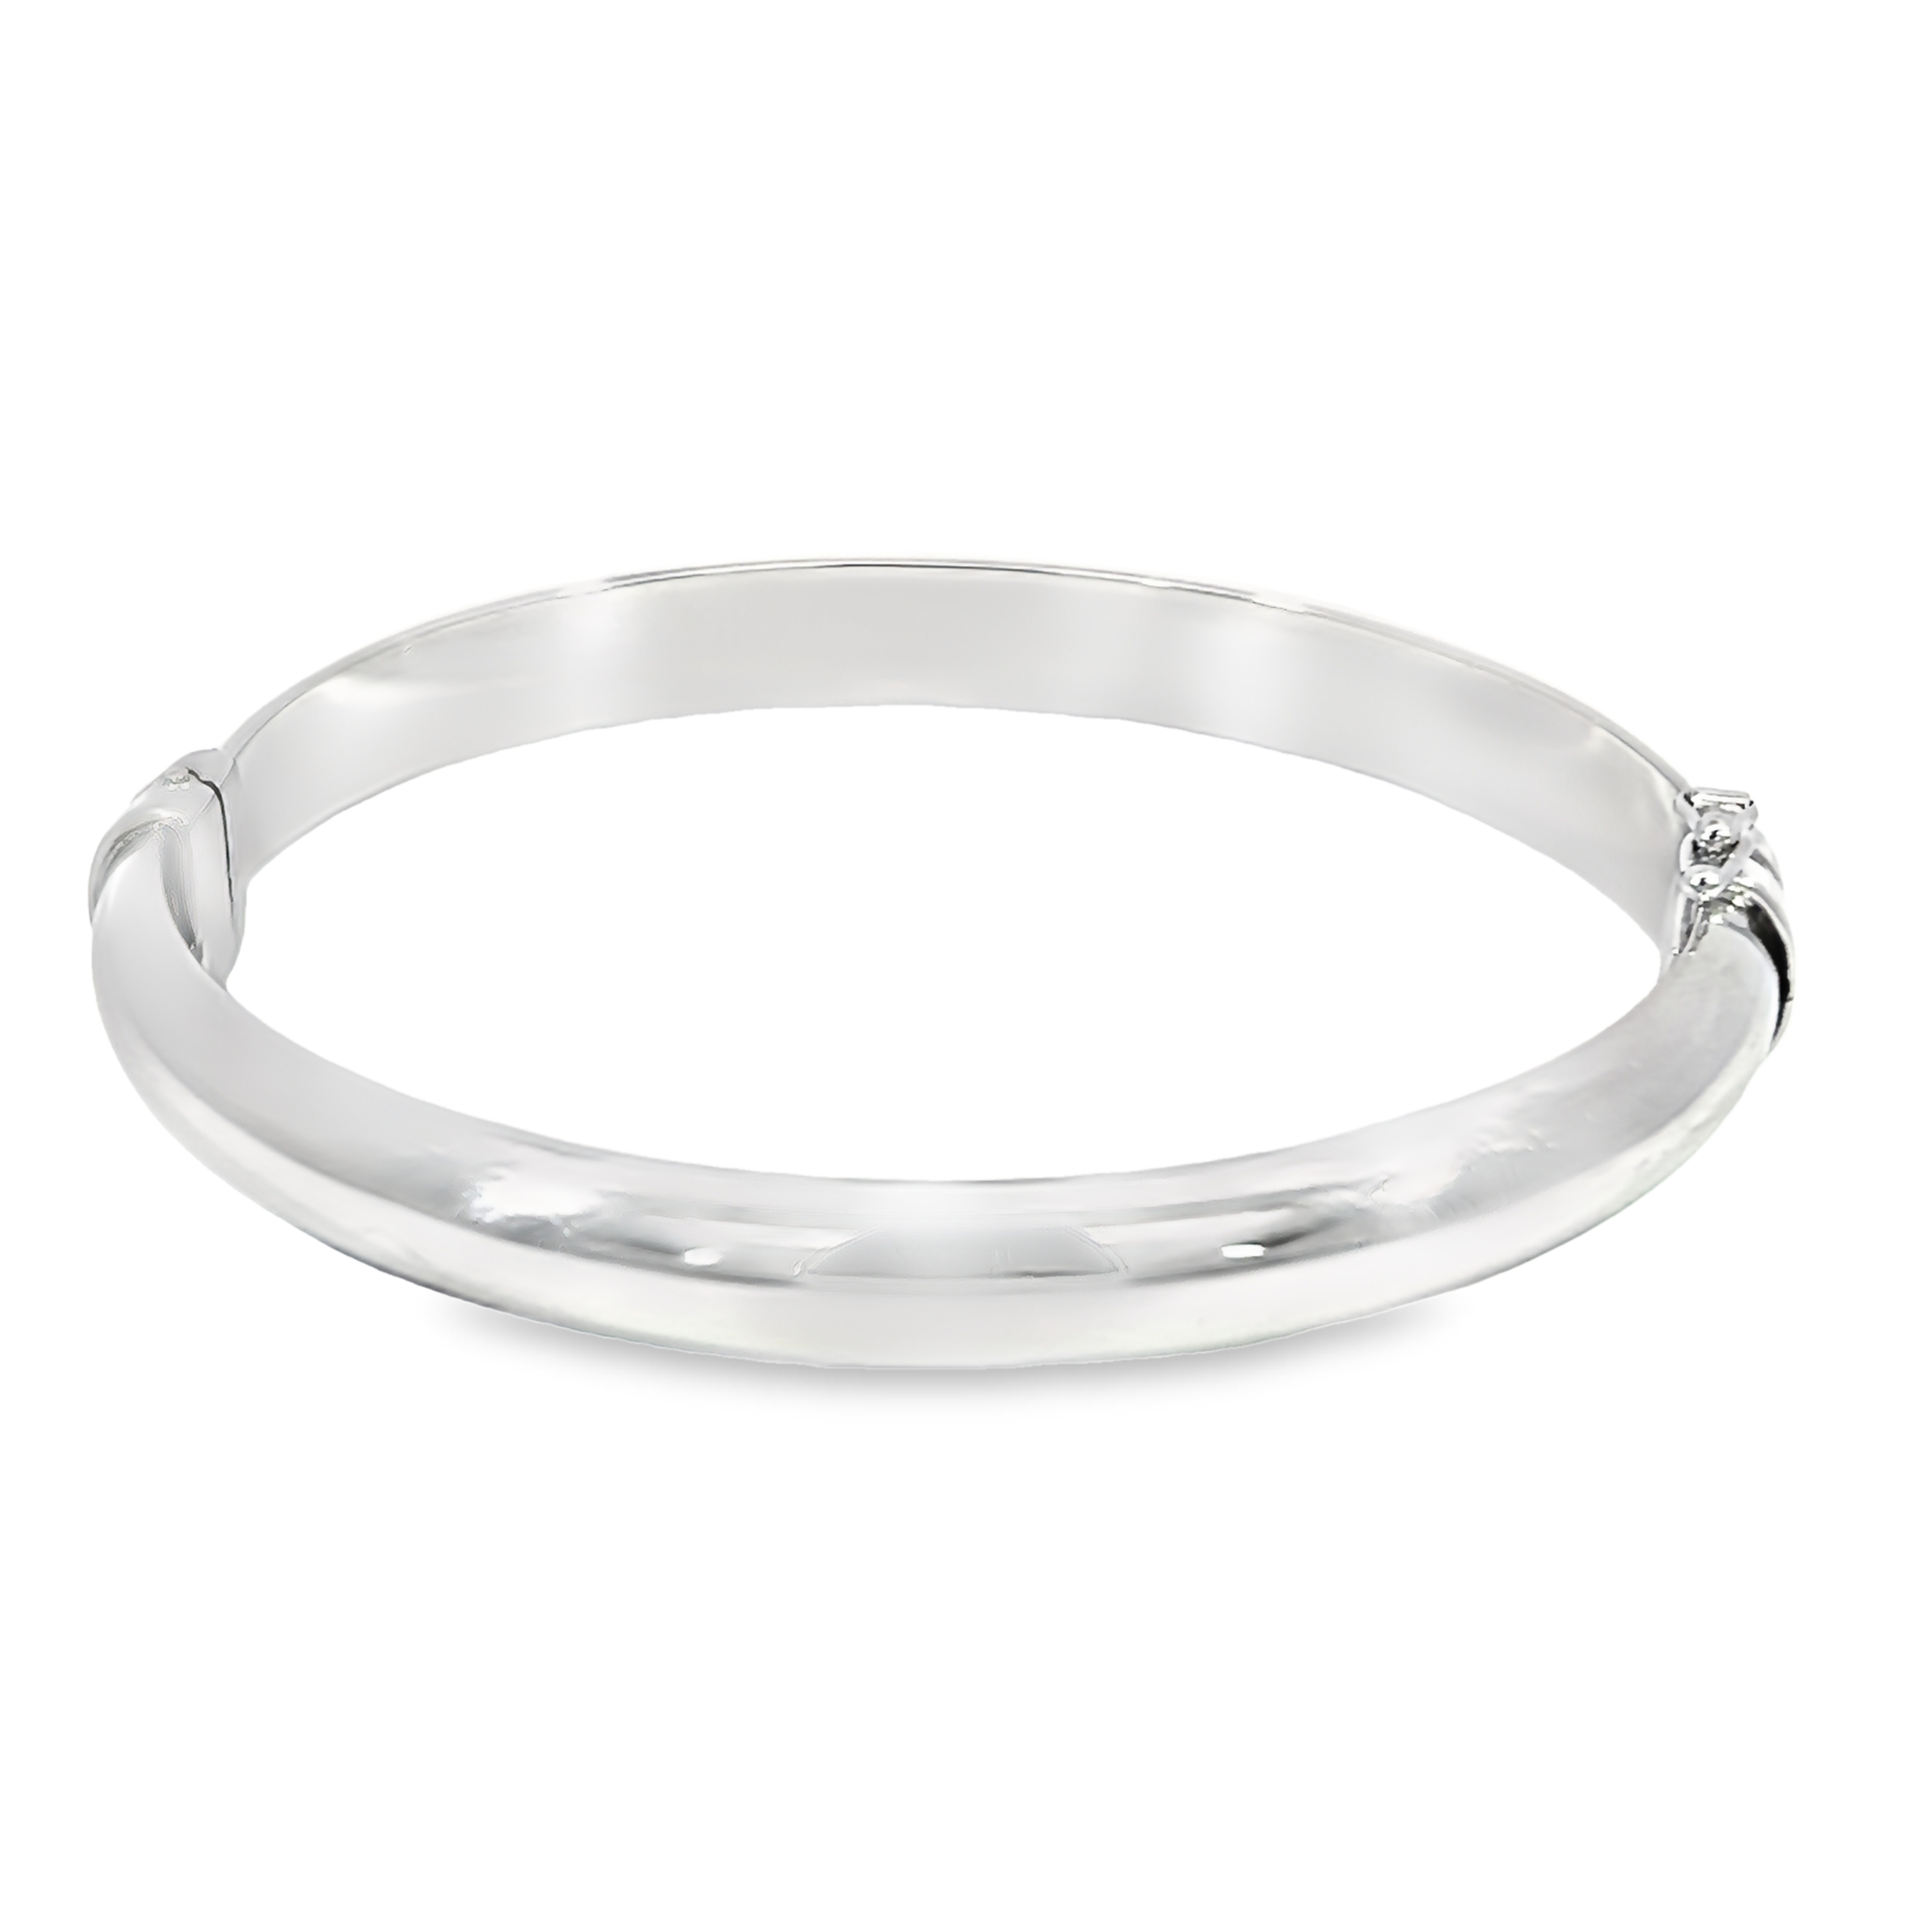 Sterling Silver Hinged Dome Bangle Bracelet